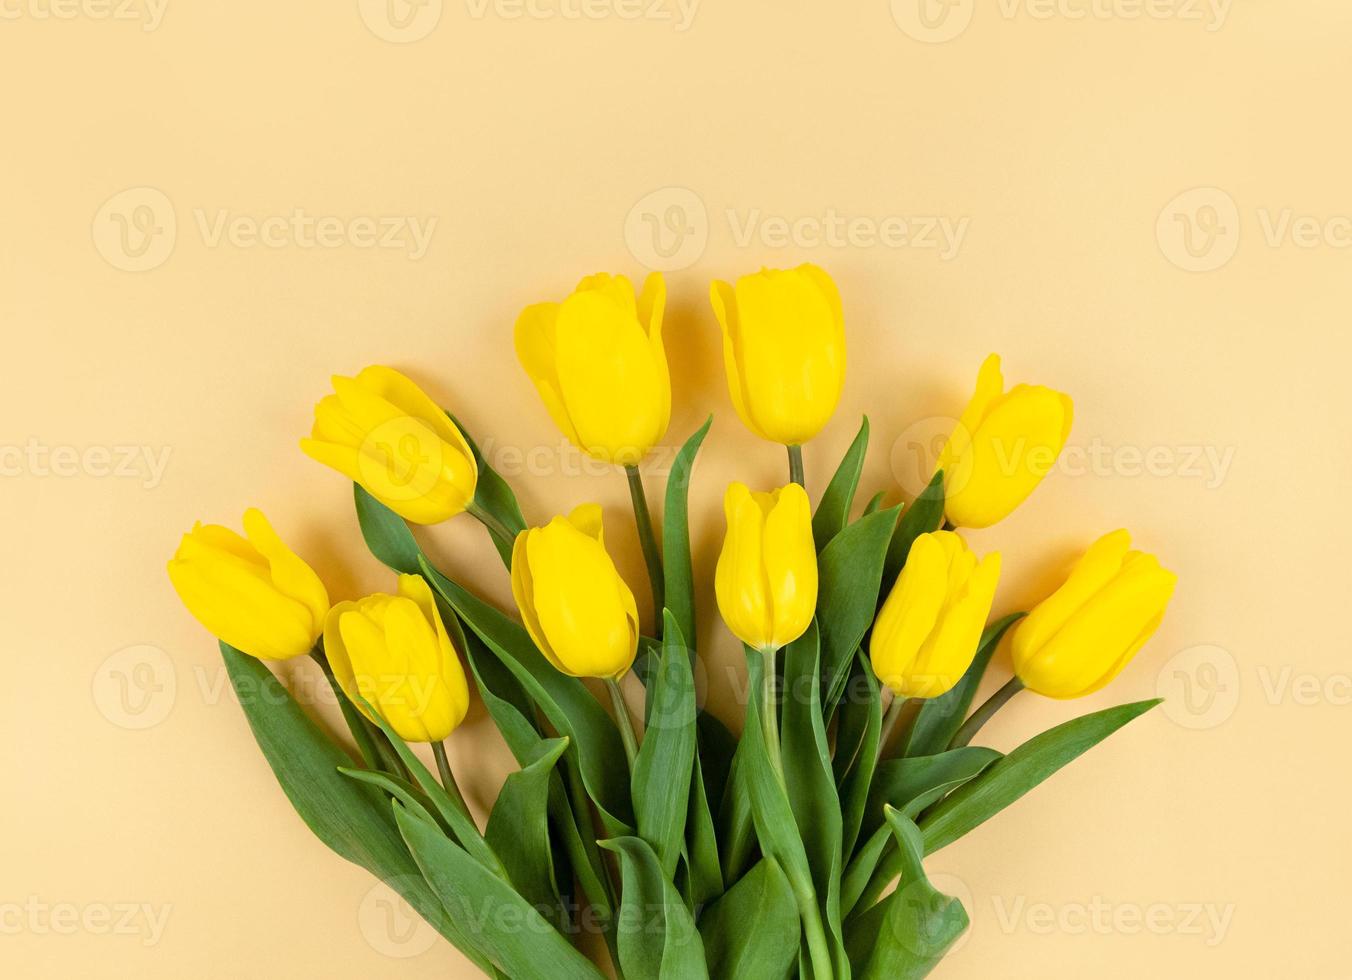 bukett med gula tulpaner på beige bakgrund foto